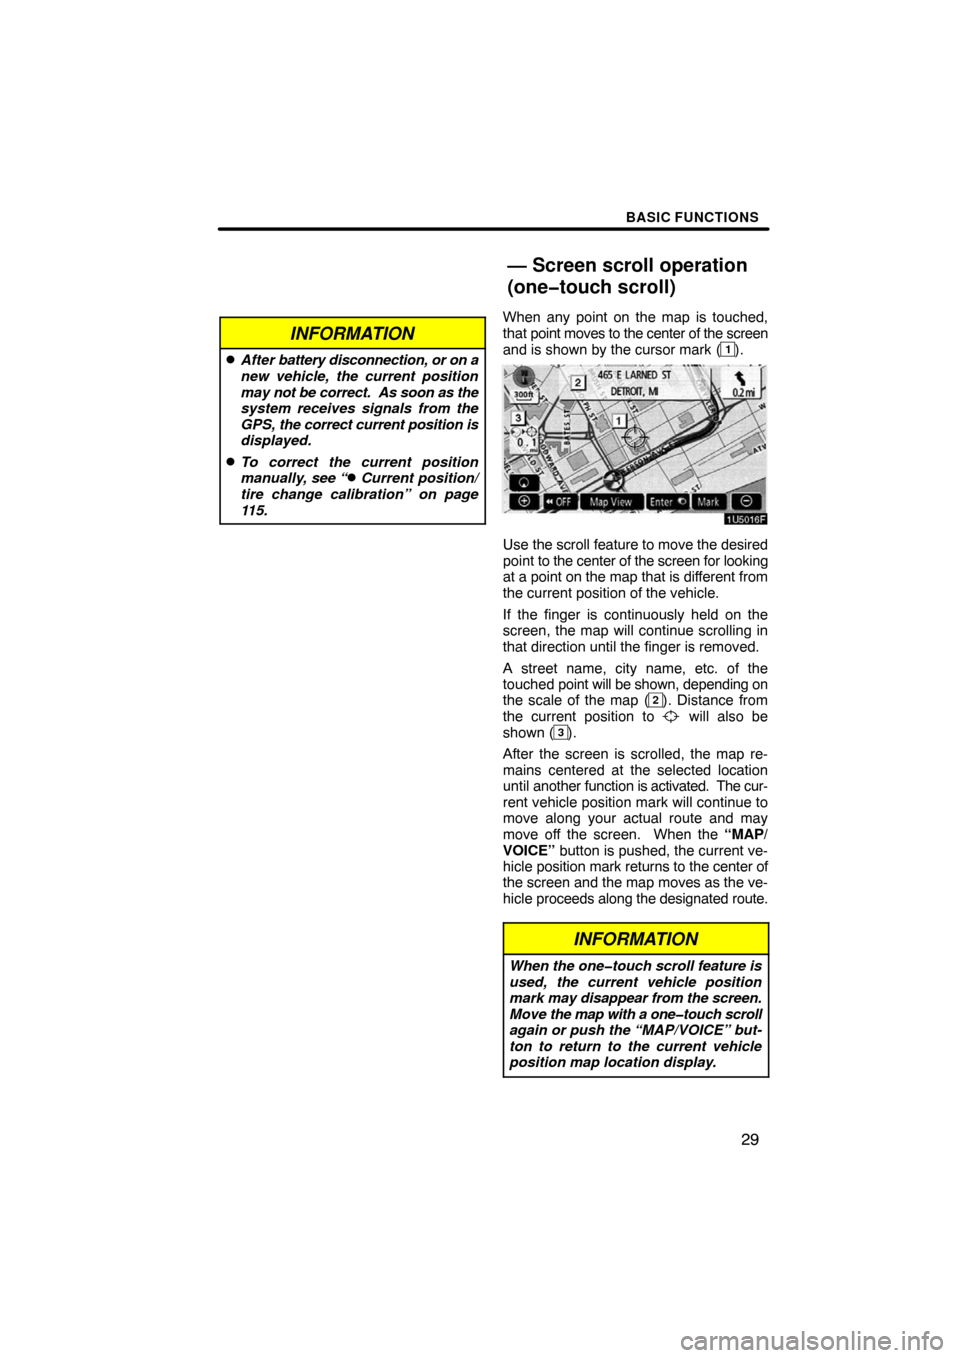 TOYOTA HIGHLANDER 2008 XU40 / 2.G Navigation Manual BASIC FUNCTIONS
29
INFORMATION
After battery disconnection, or on a
new vehicle, the current position
may not be correct.  As soon as the
system receives signals from the
GPS, the correct current pos